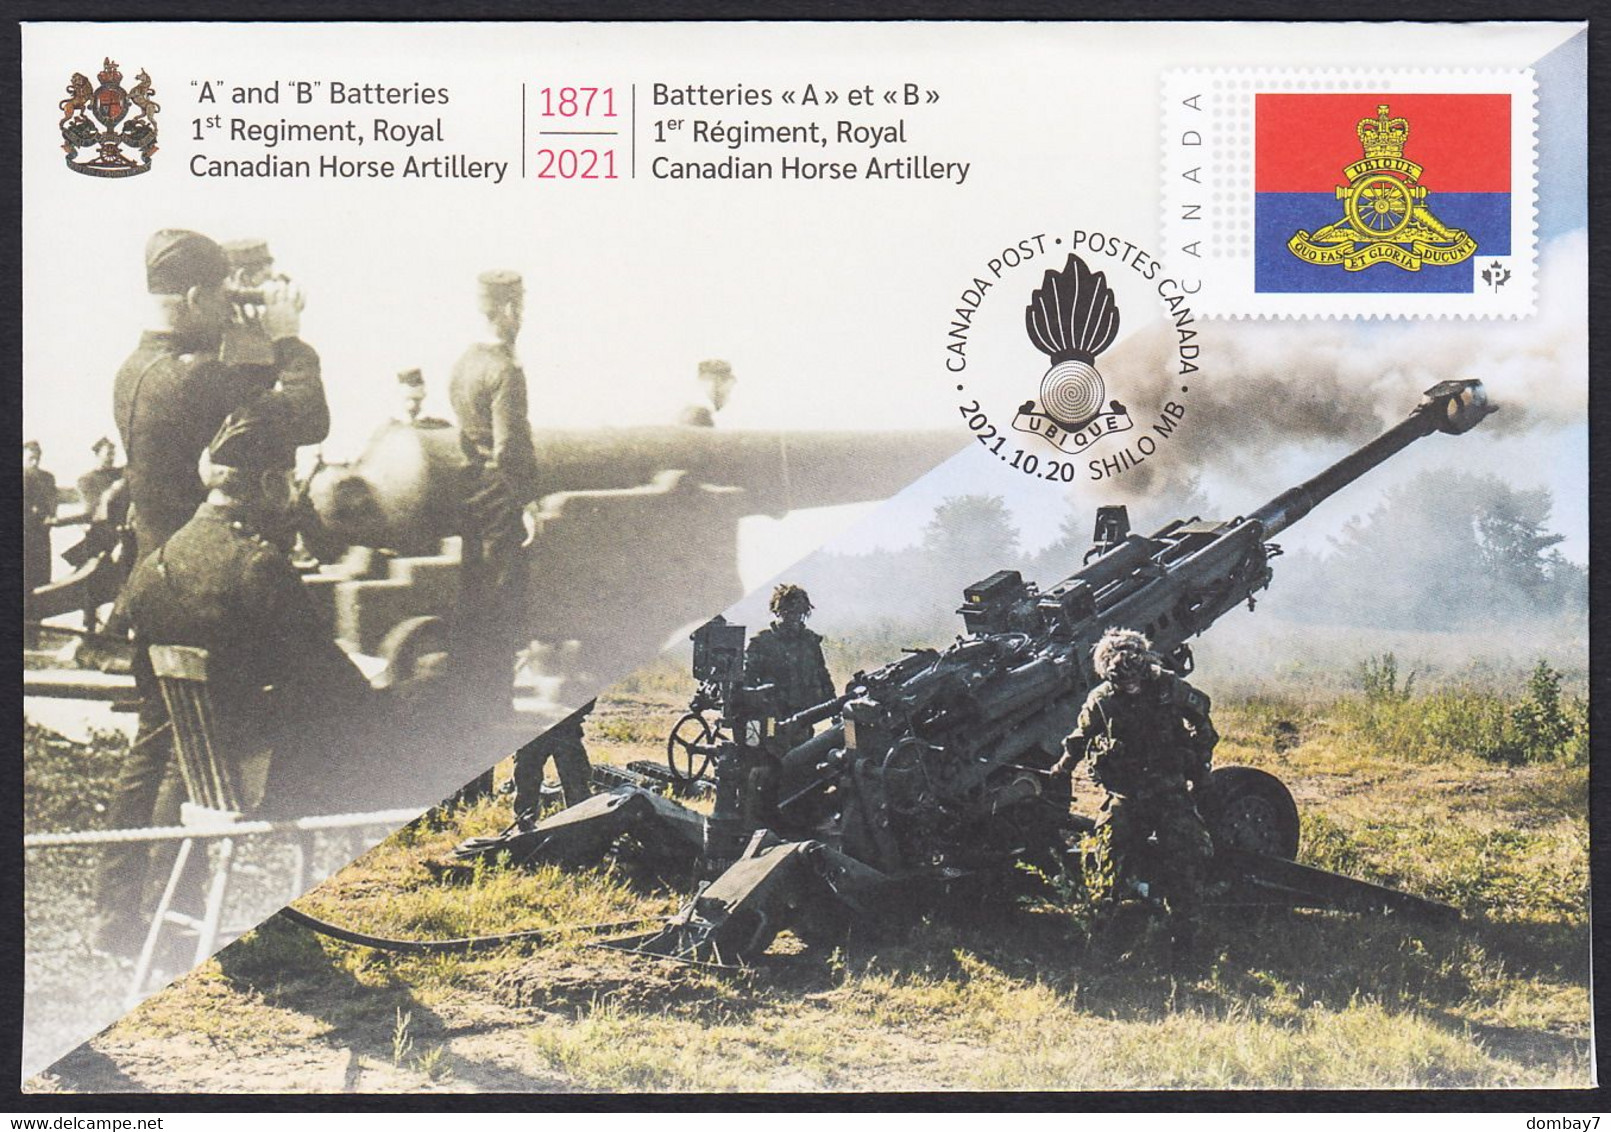 Qc. ARTILLERY - ROYAL REGIMENT - Military - COMMEMORATIVE ENVELOPE / COVER / FDC Canada 2021 - Enveloppes Commémoratives